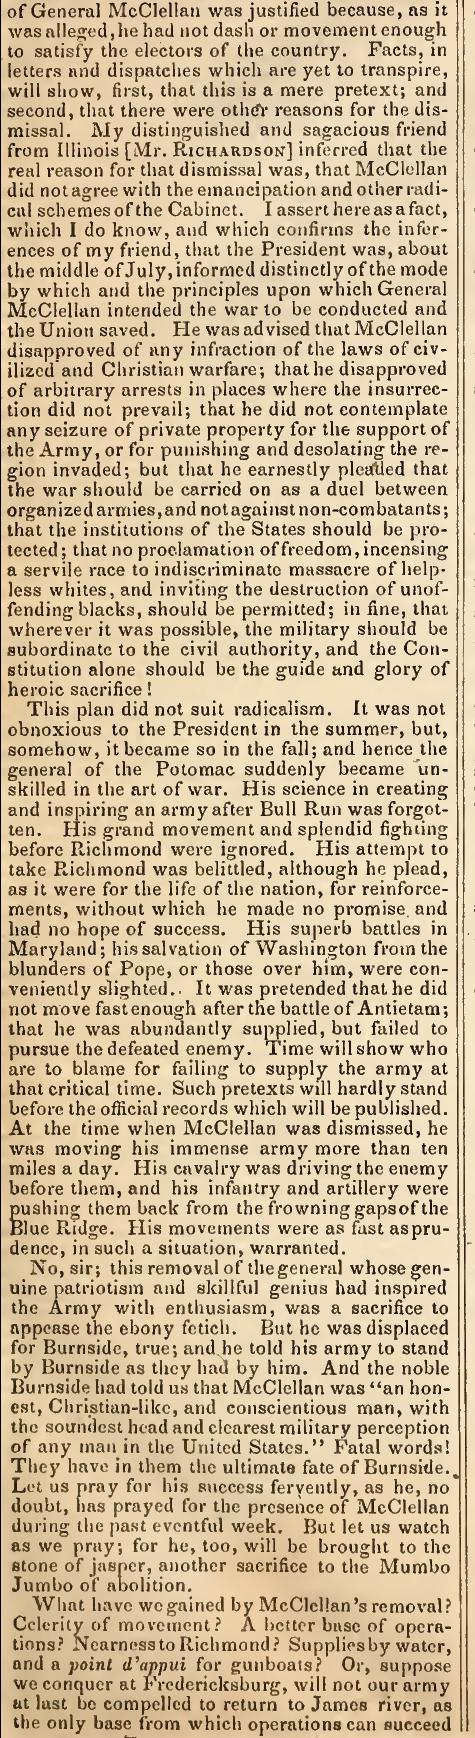 Democratic House member Samuel Cox of Ohio criticizes President Lincoln's dismissal of General McClellan � Congressional Globe December 18, 1862